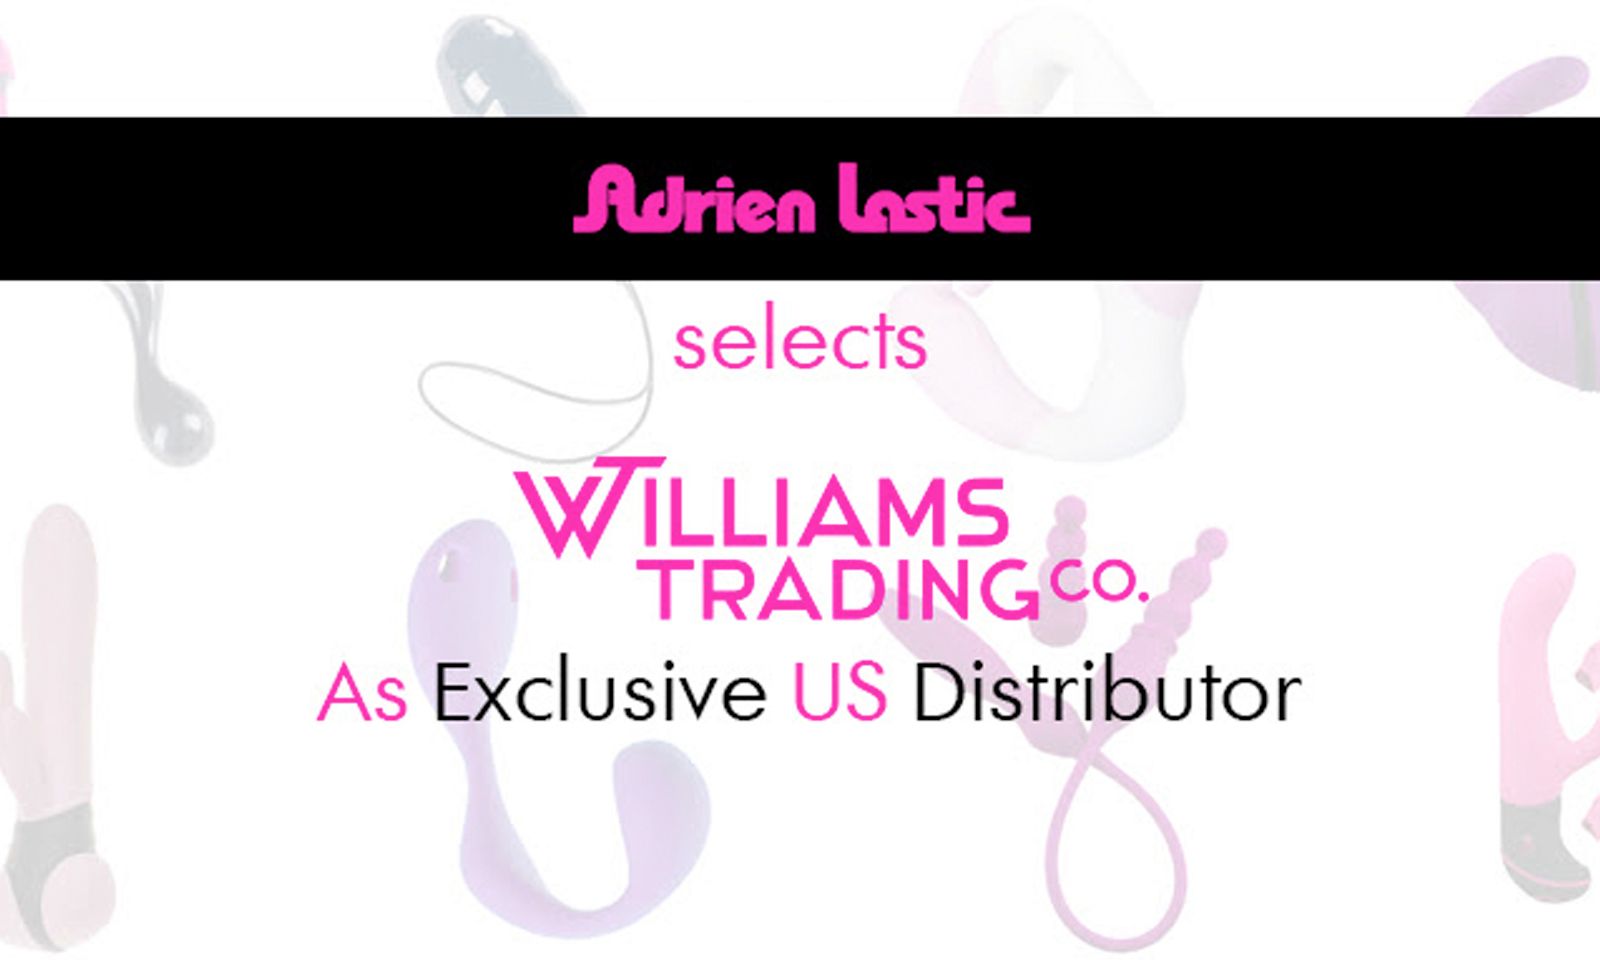 Adrien Lastic Taps Williams Trading Co. as Exclusive U.S. Distributor